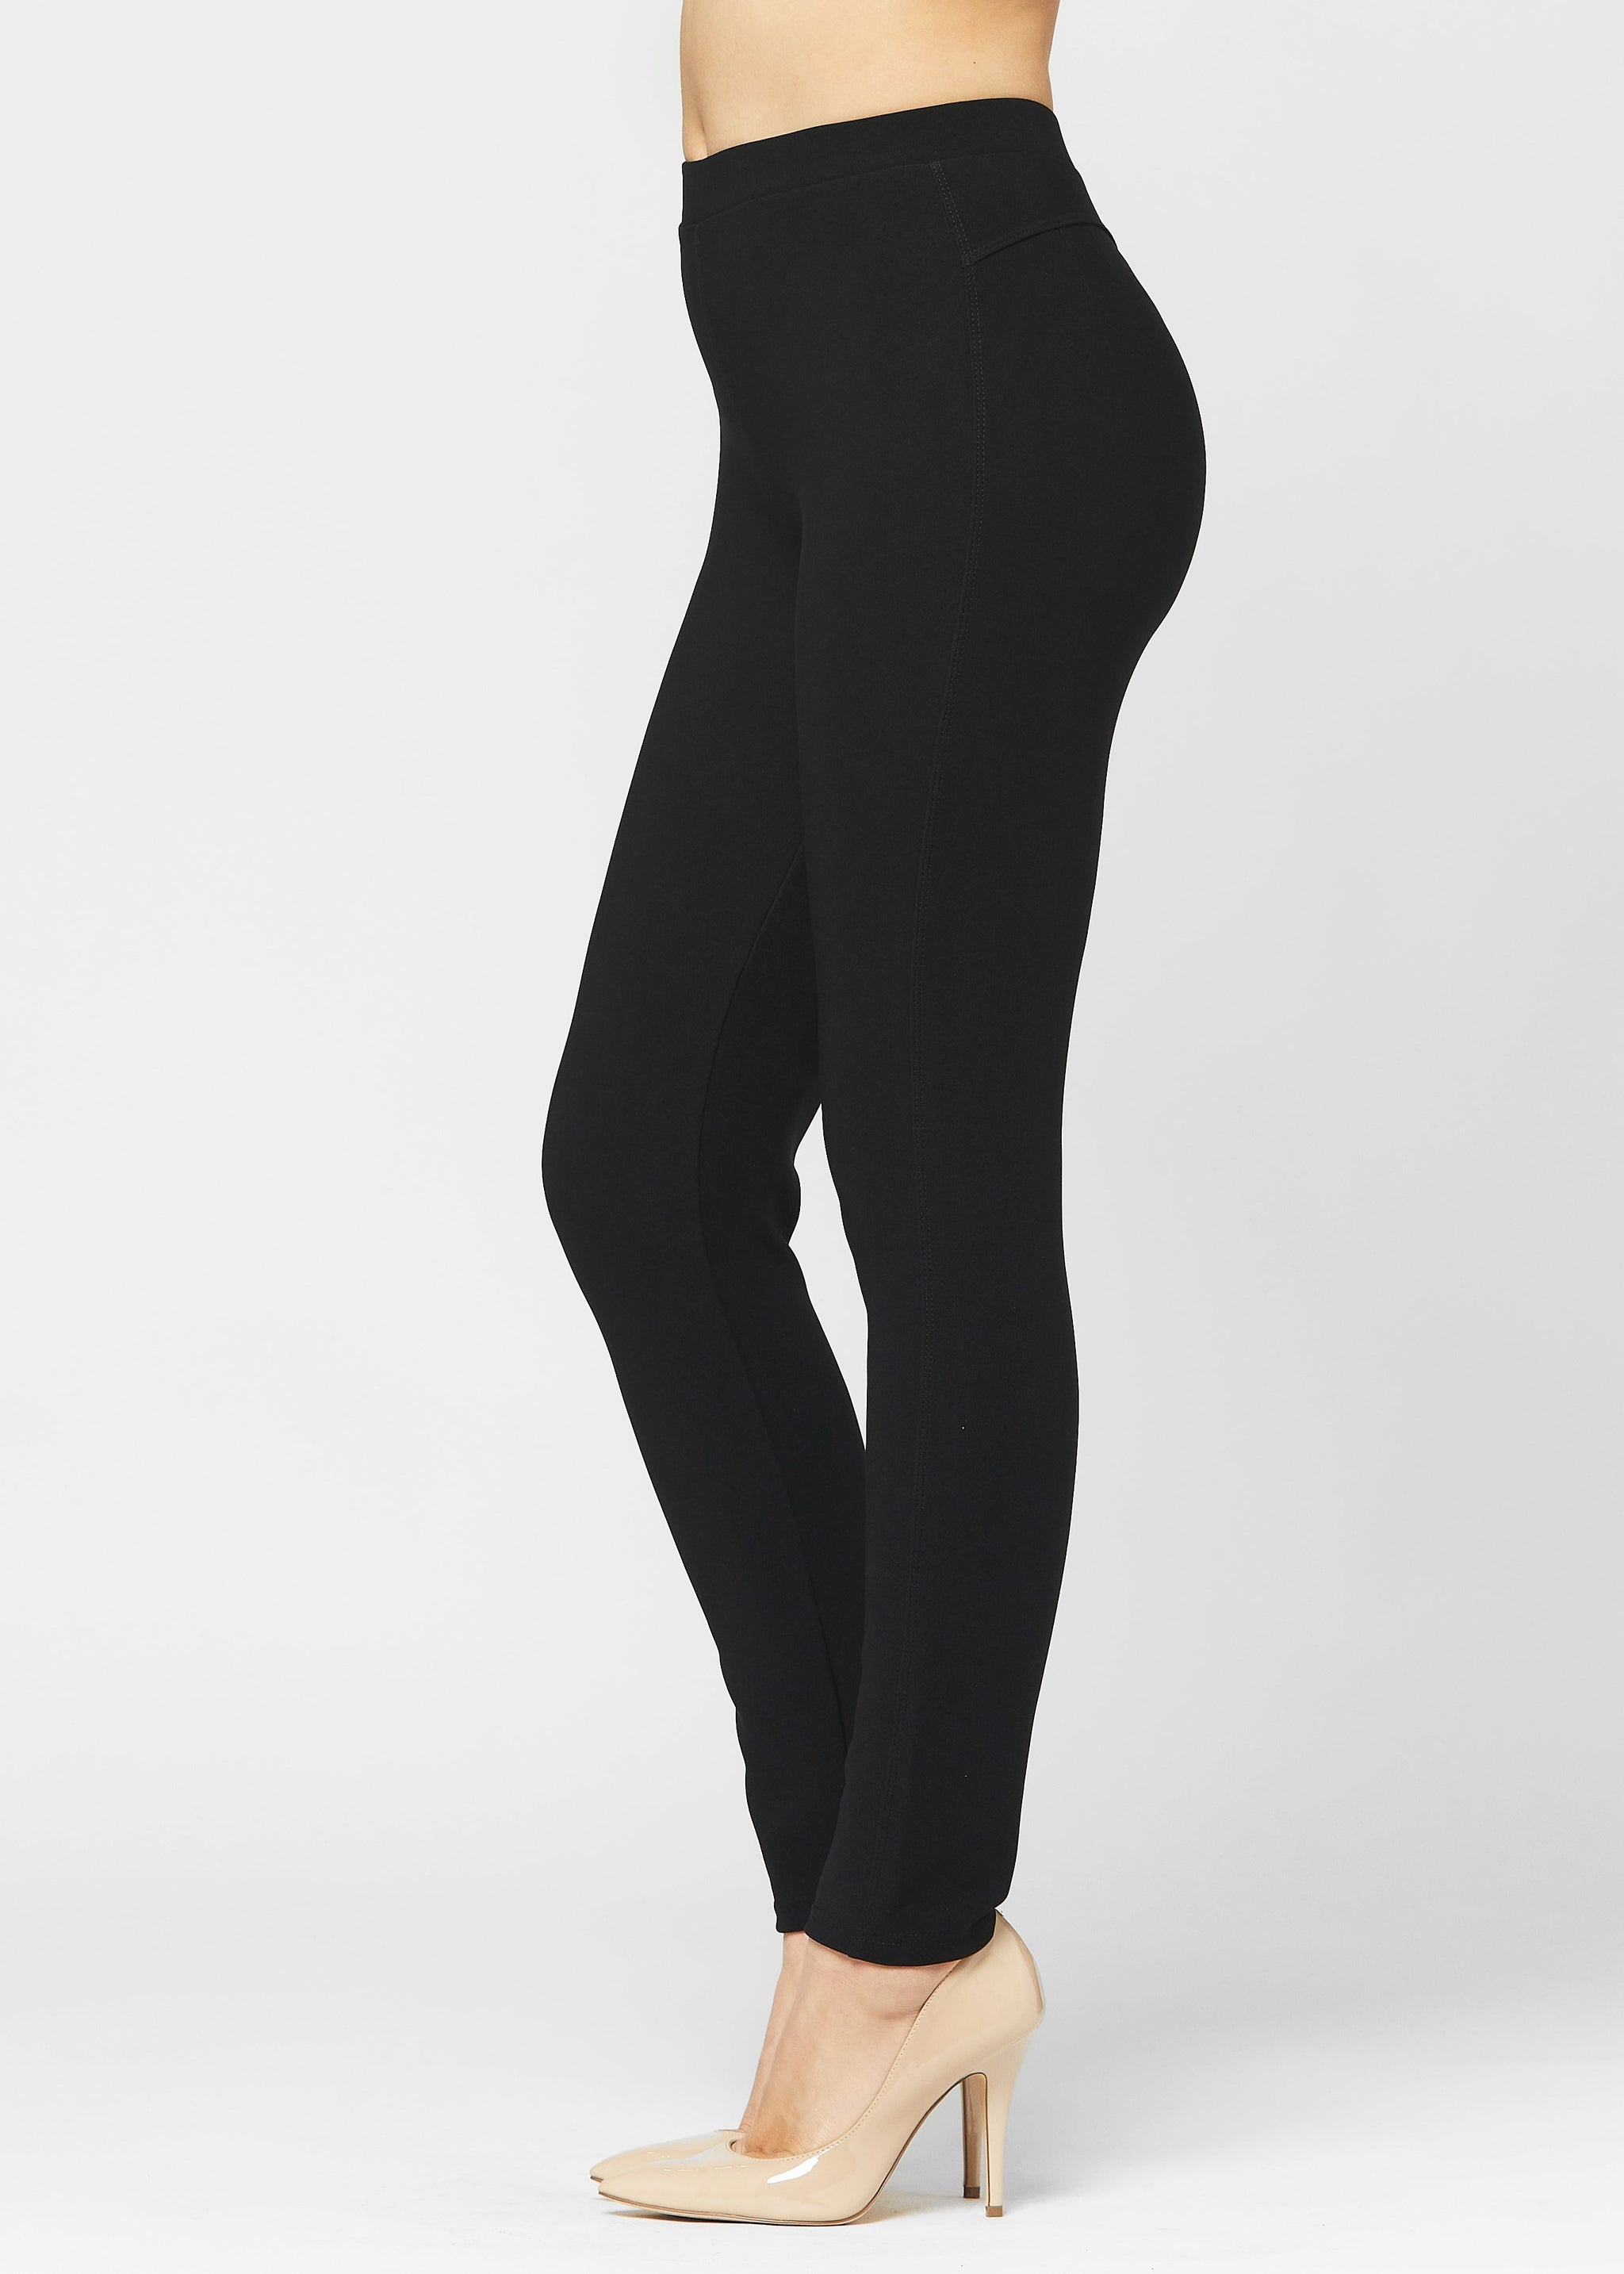 Just $39.95 Classic Women's High Waisted Yoga Pants.  Leggings are not  pants, High waisted yoga leggings, Lulu yoga pants